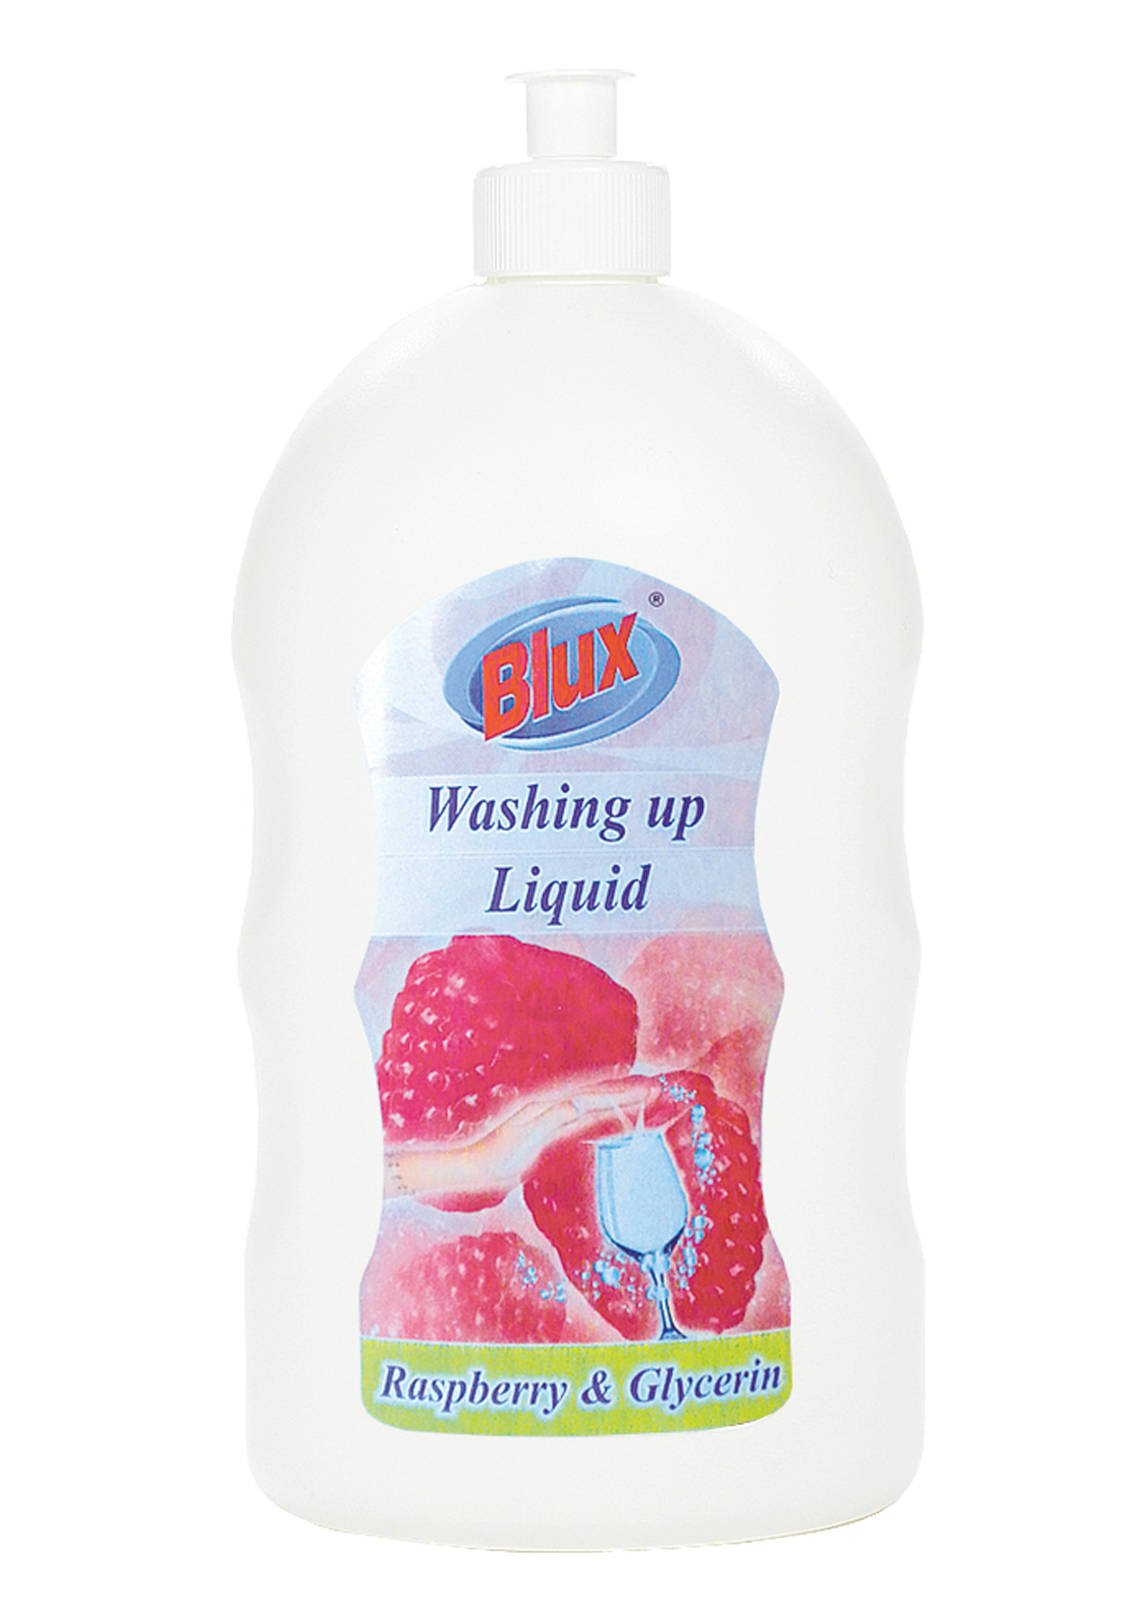 https://static4.blux.sklep.pl/eng_pl_Dishwashing-liquid-raspberry-with-glycerin-1L-240_1.jpg